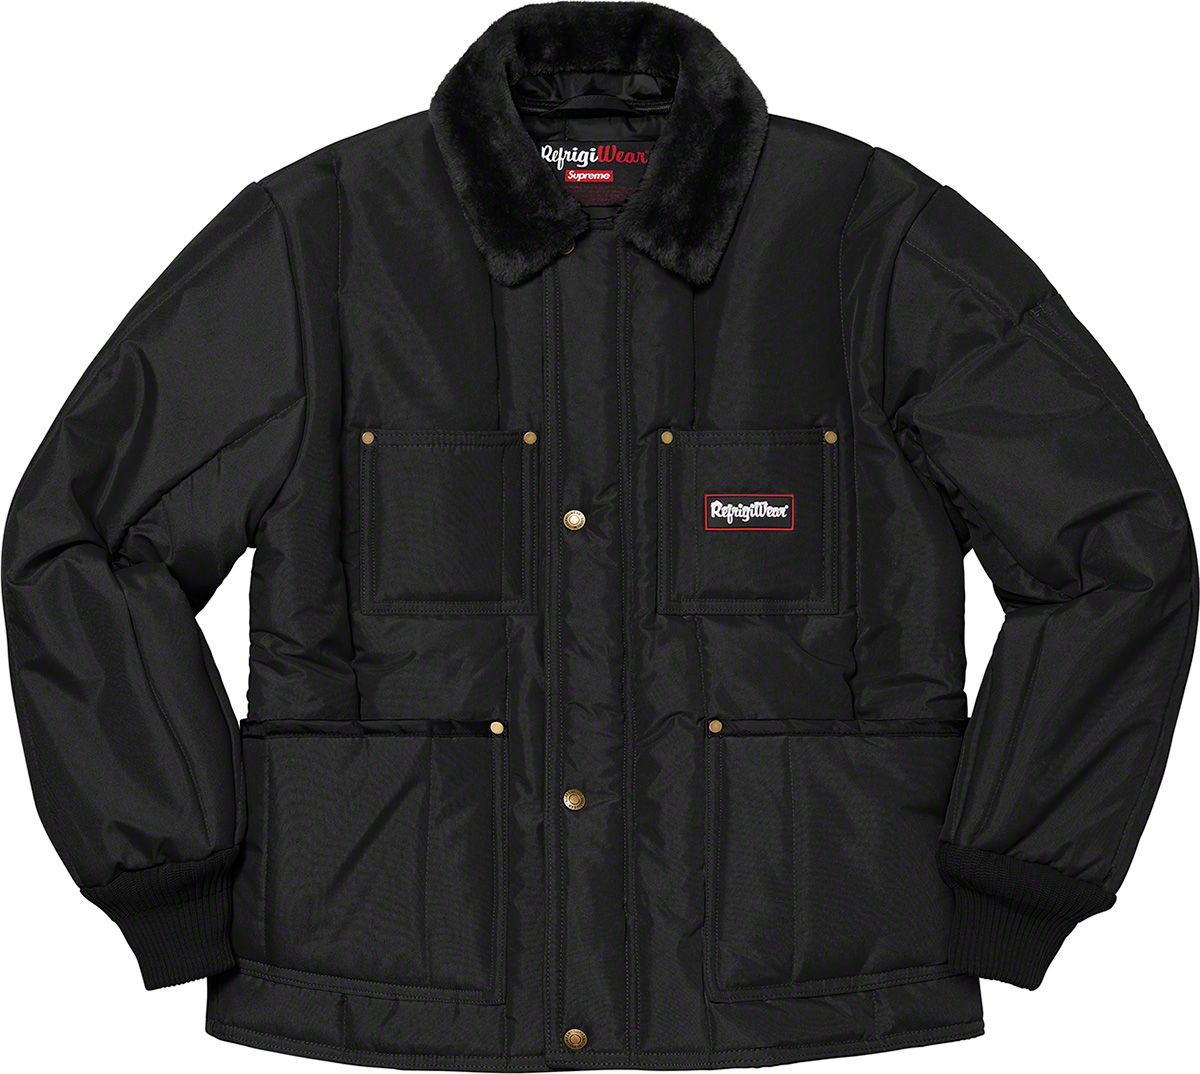 Supreme®/RefrigiWear® Insulated Iron-Tuff Jacket - Fall/Winter 